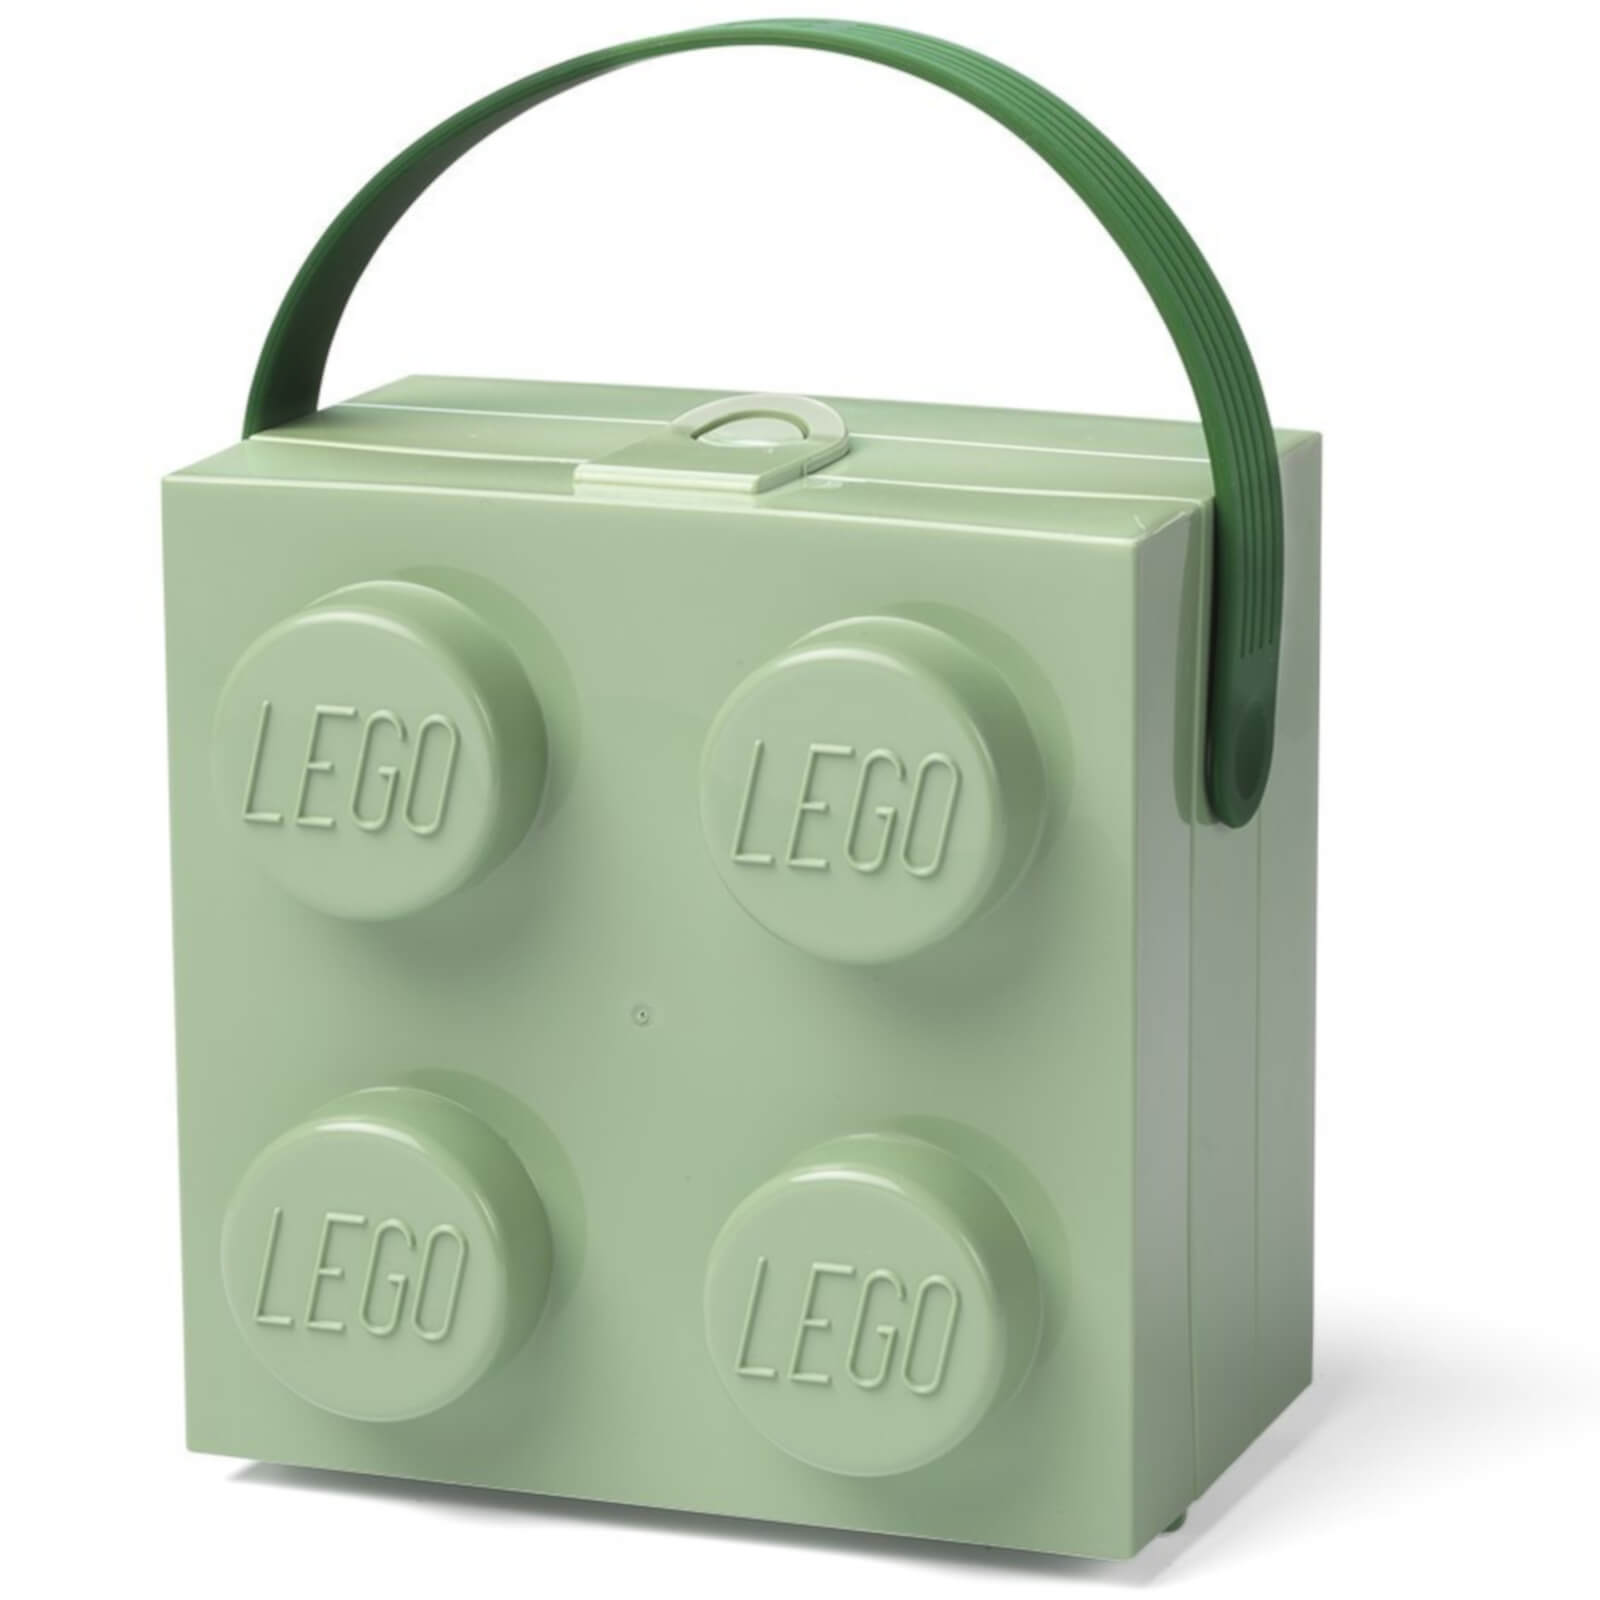 Room Copenhagen LEGO Lunch Box with Handle - Sand Green